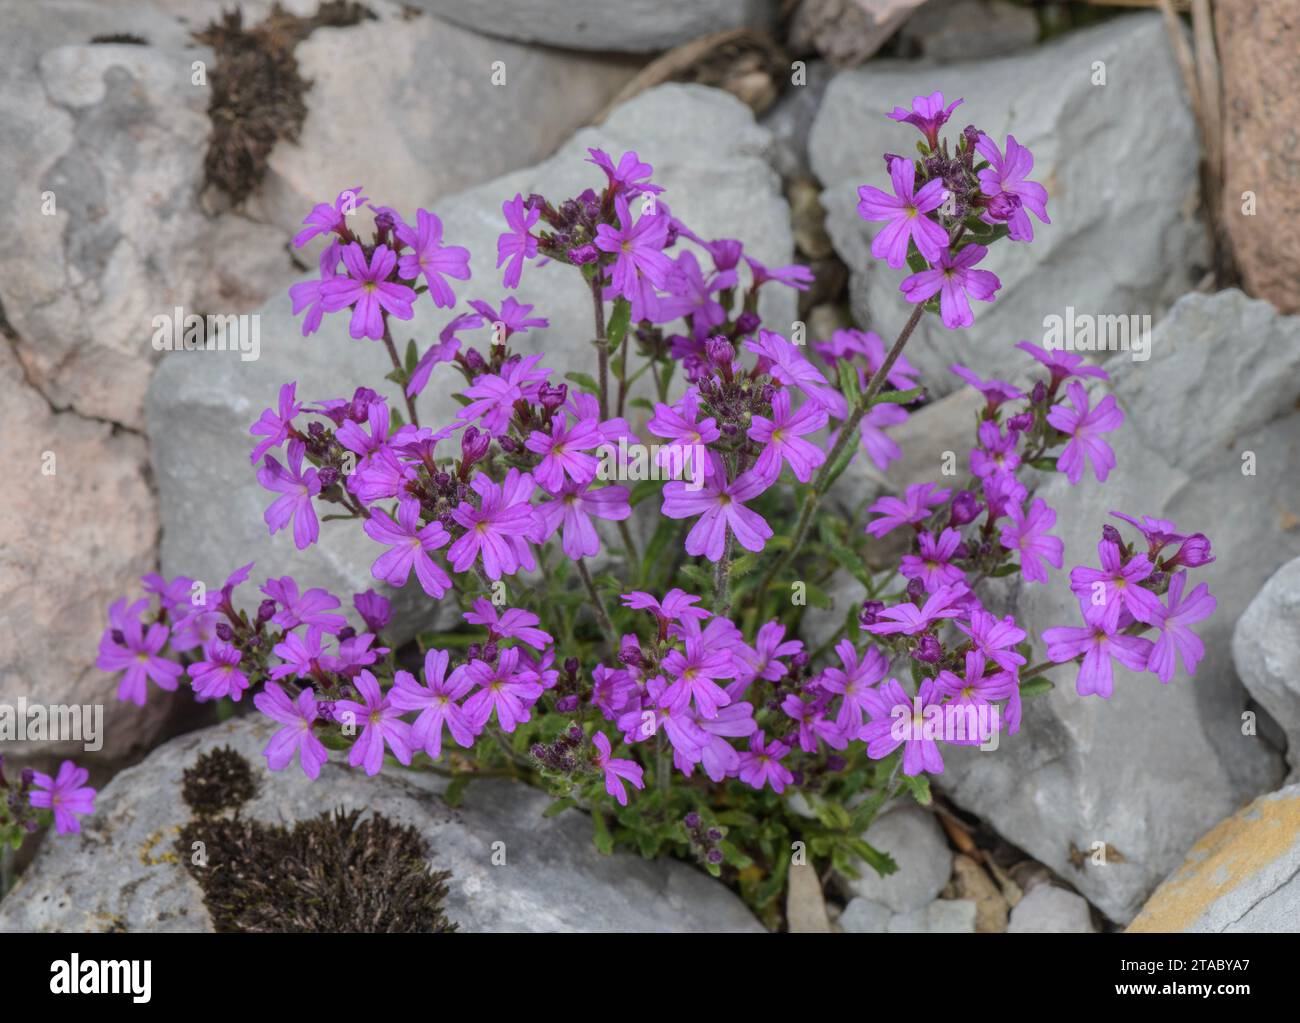 Fairy foxglove, Erinus alpinus, in fiore su ghiaia calcarea, Alpi. Foto Stock